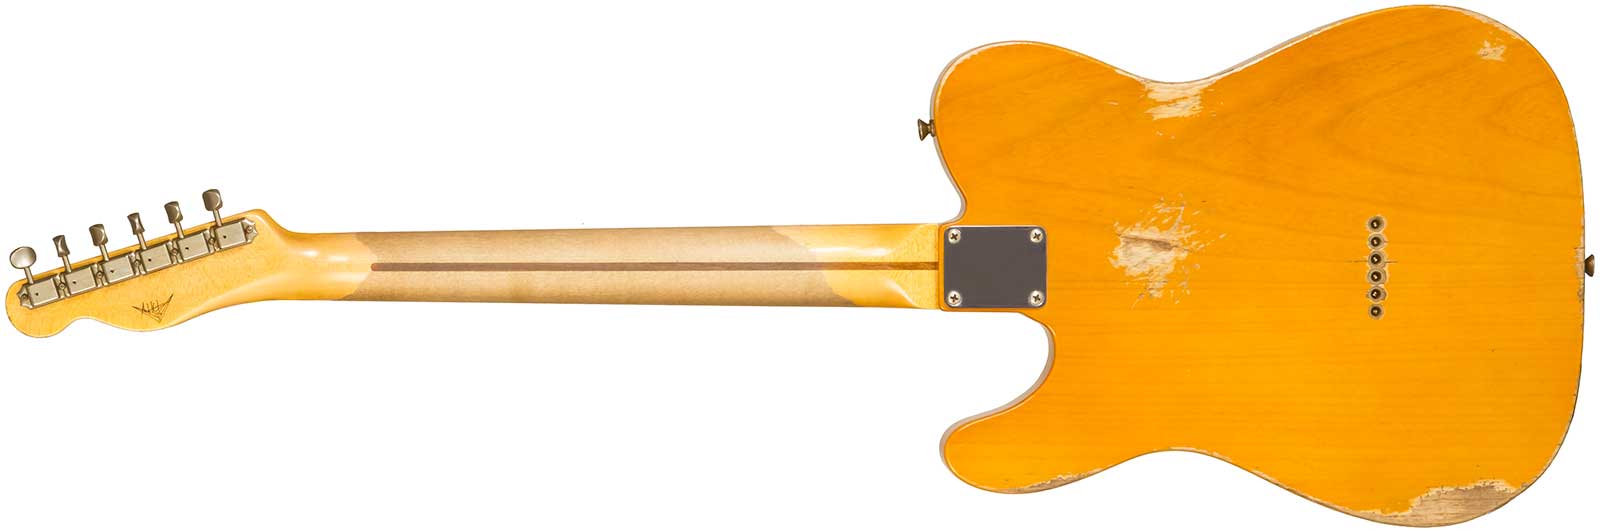 Fender Custom Shop Tele 1952 Masterbuilt A.hicks 2s Ht Mn #r126811 - Relic Smoked Butterscotch Blonde - Televorm elektrische gitaar - Variation 1